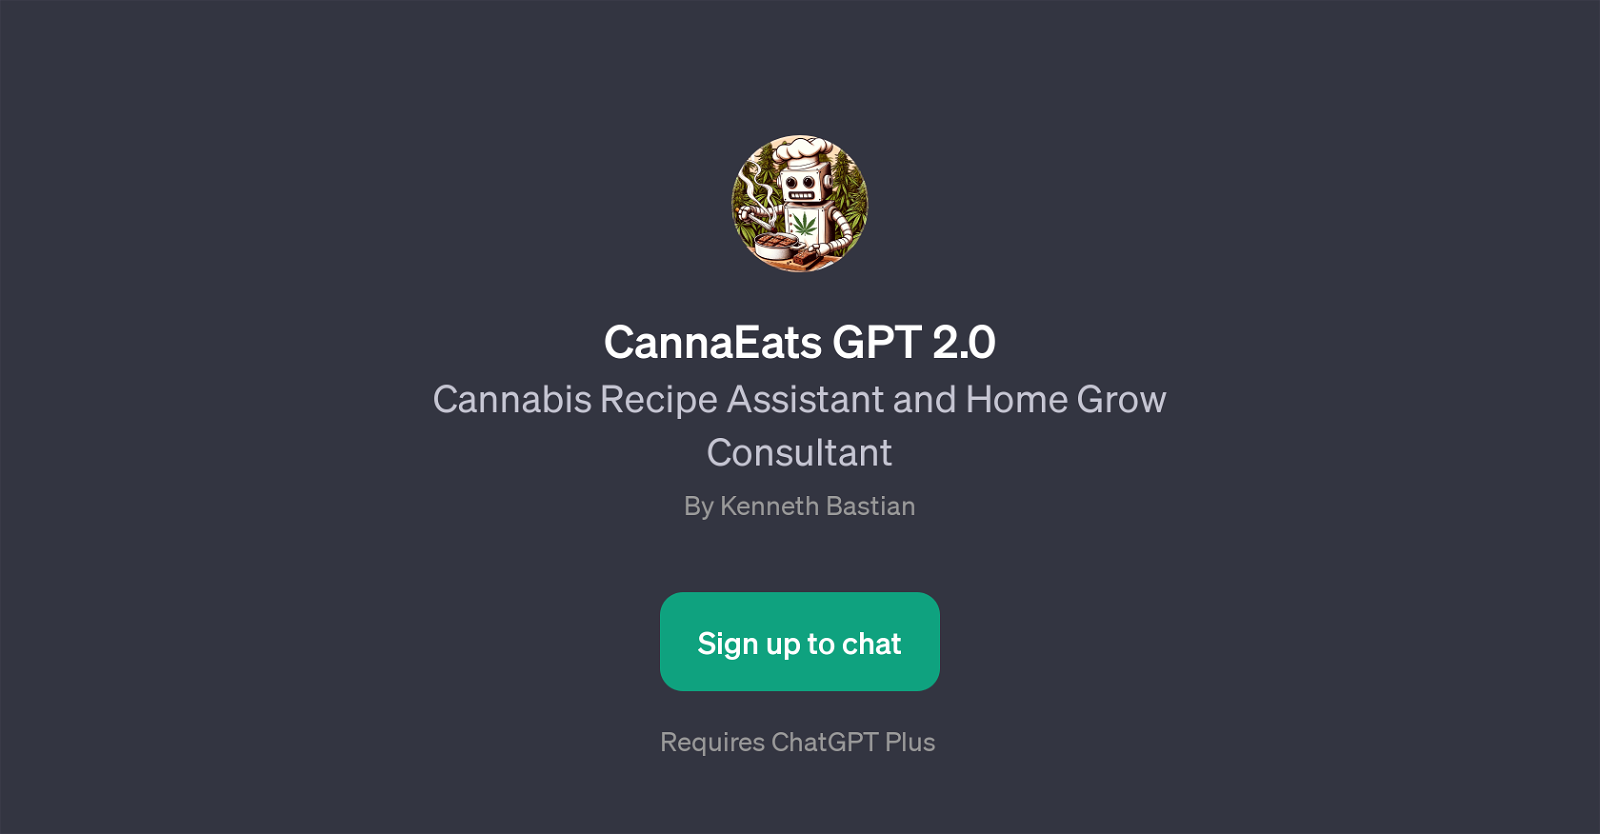 CannaEats GPT 2.0 website